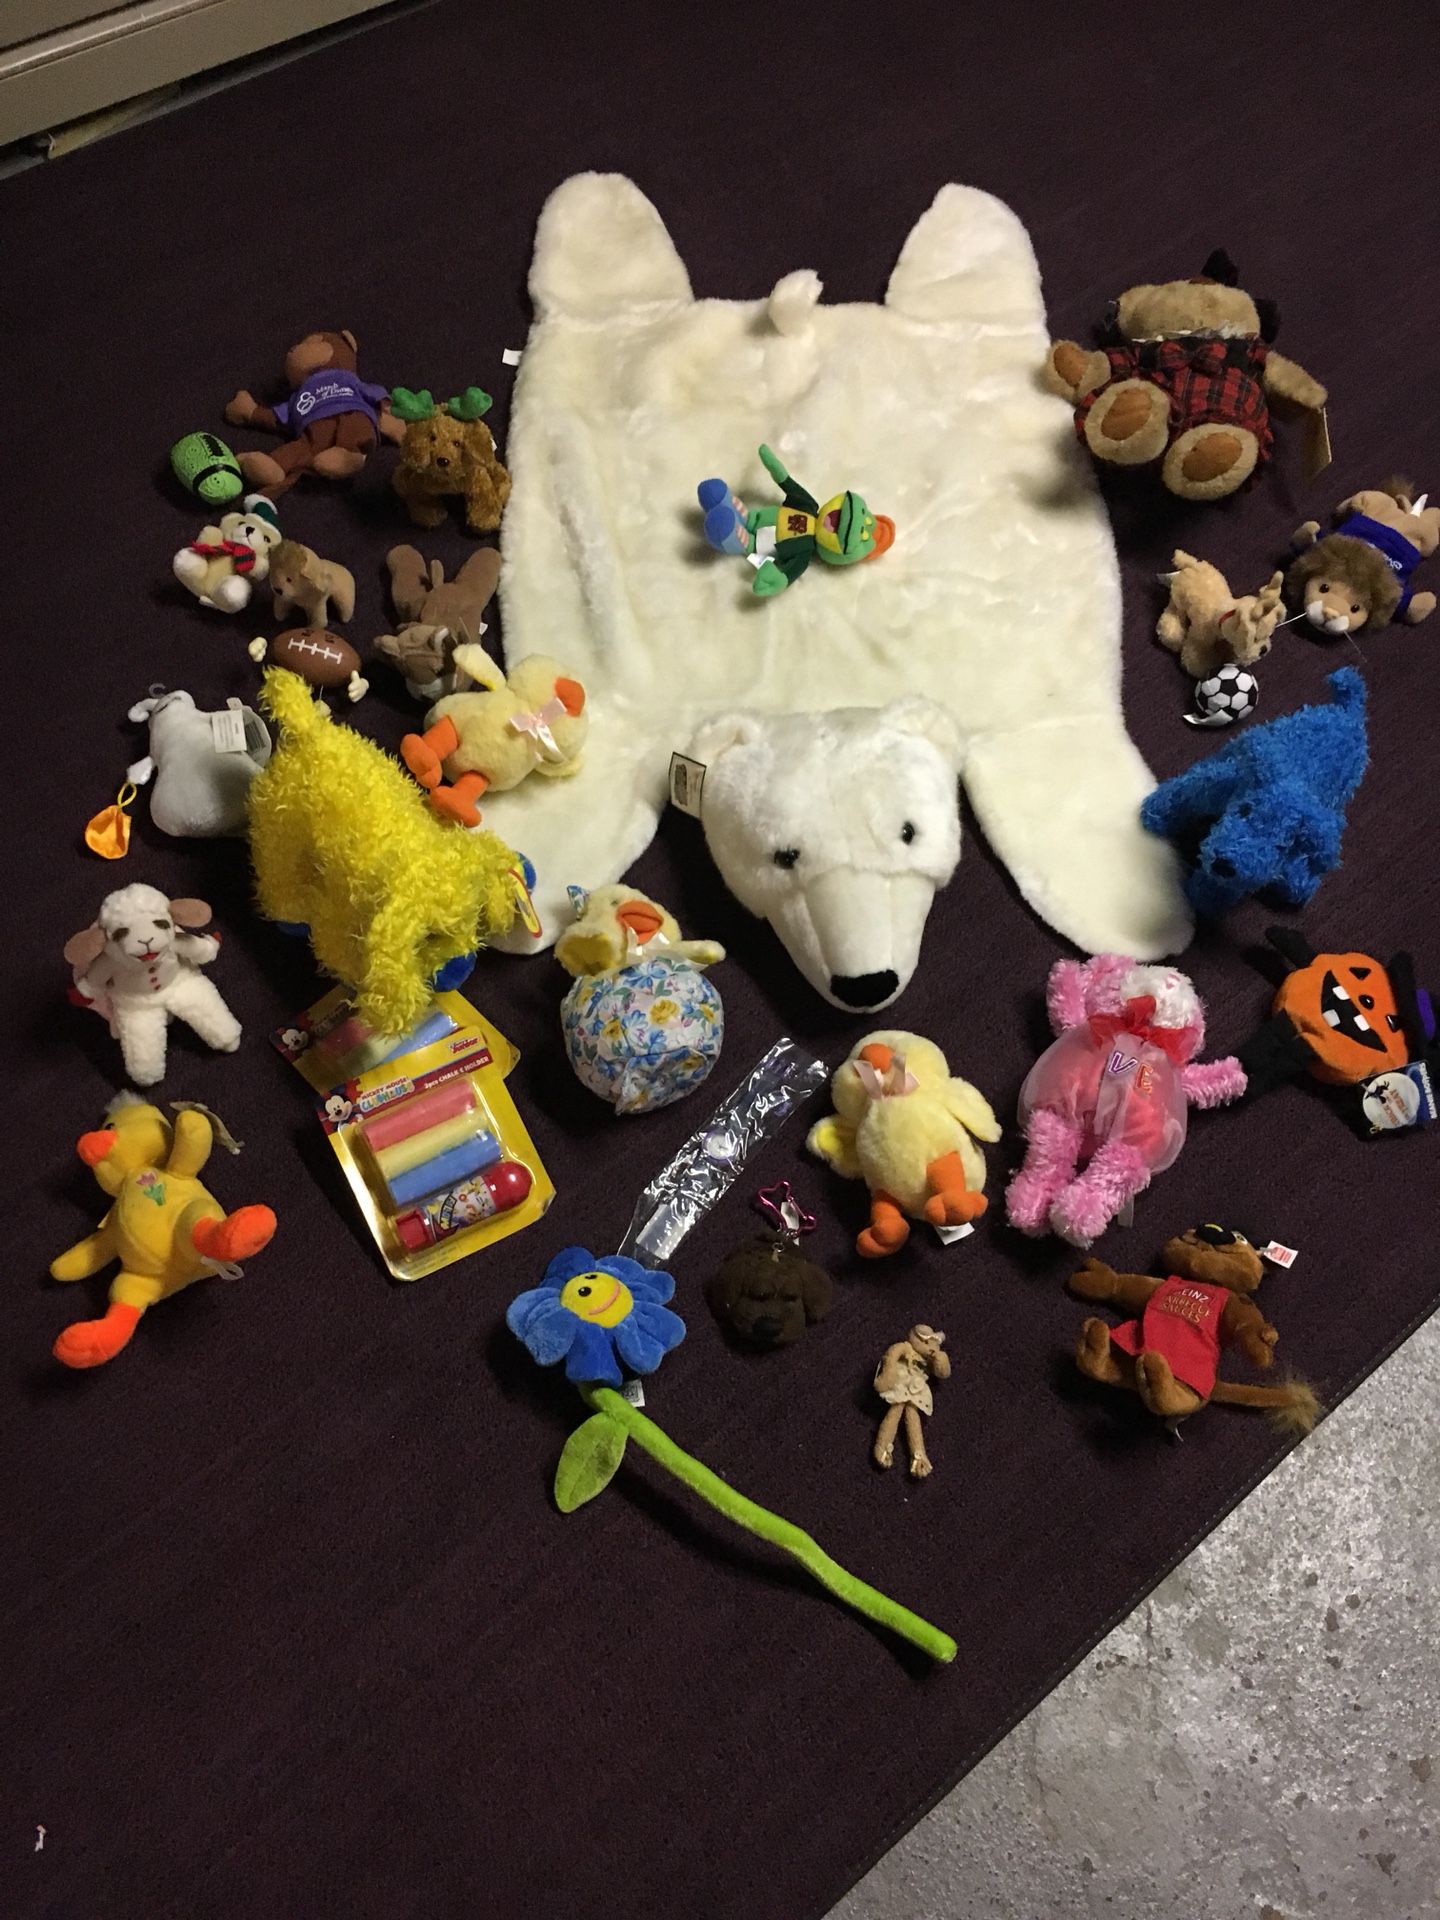 Bear rug and stuffed animals